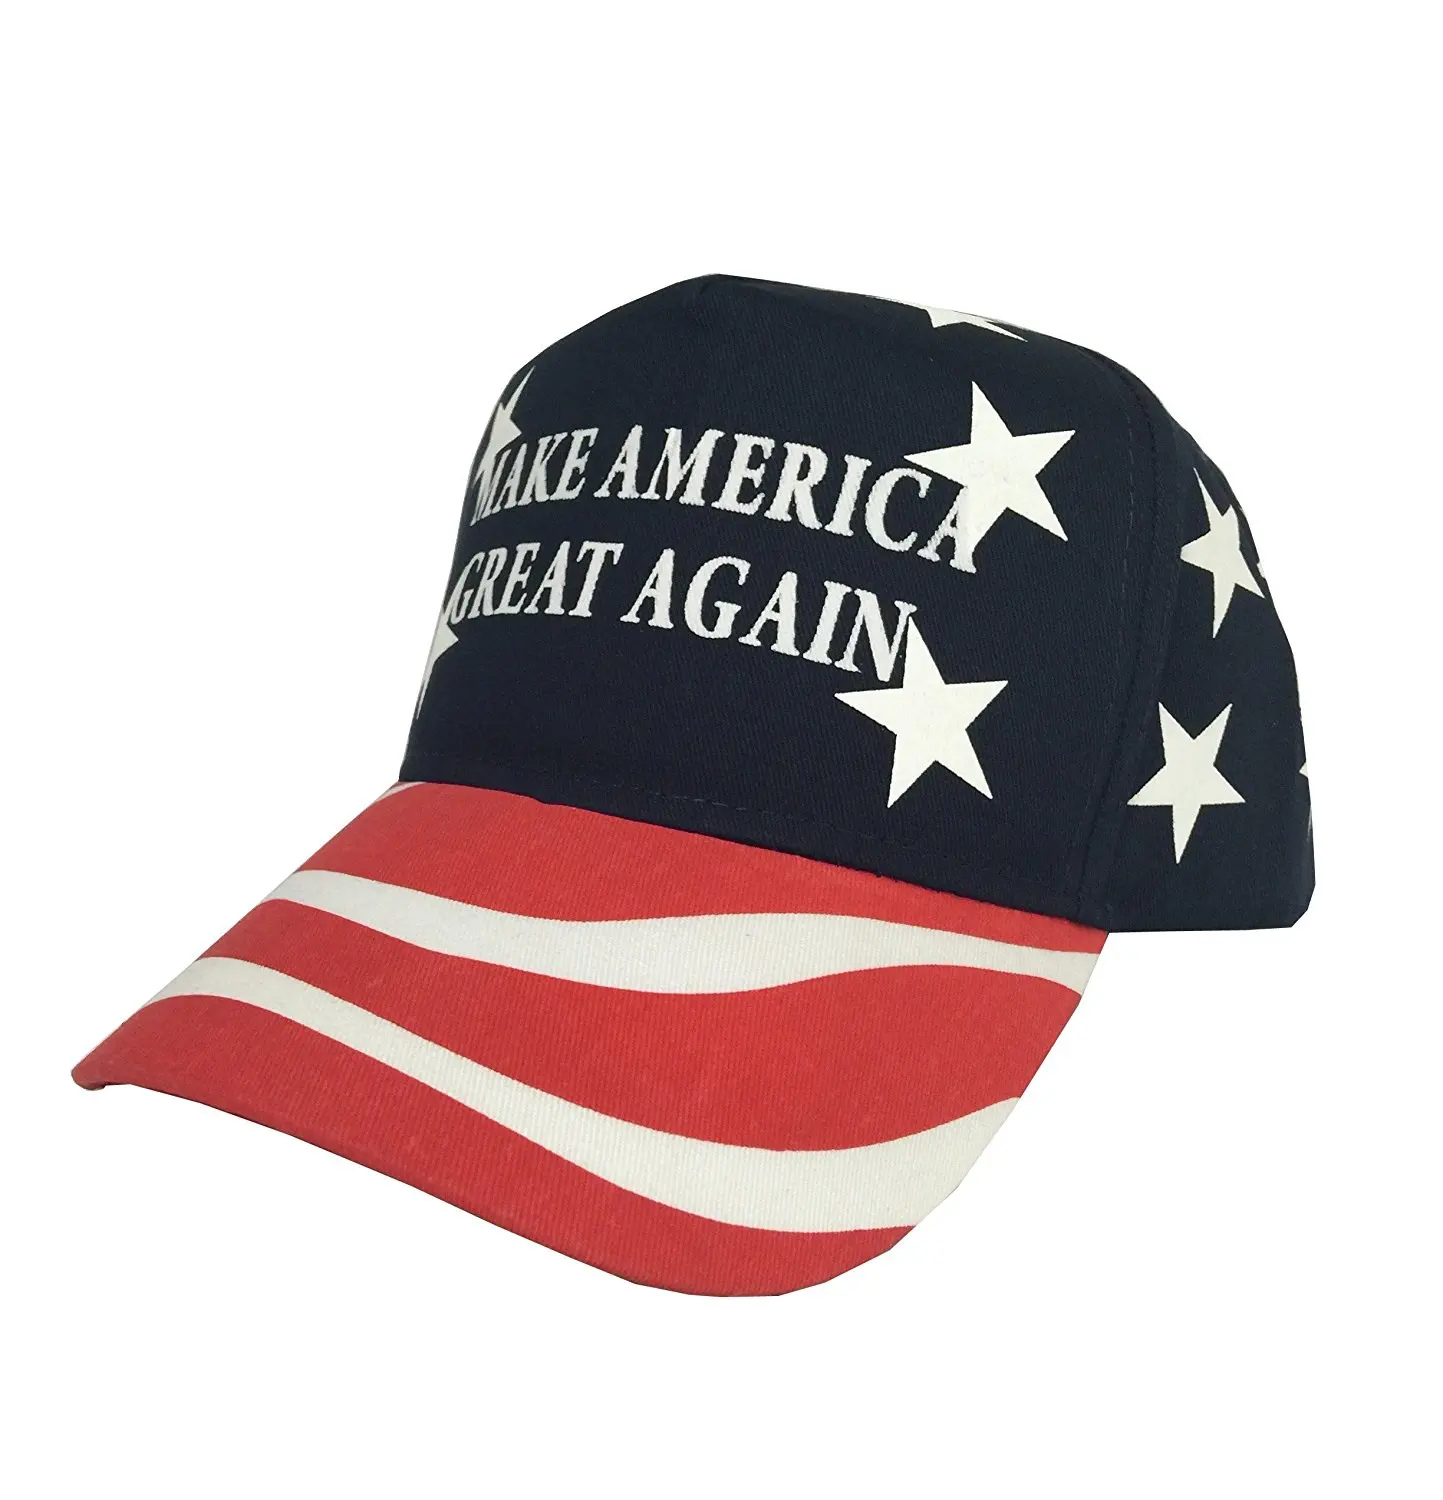 P&B Campaign Adjustable Unisex Hat Cap Make America Great Again! 